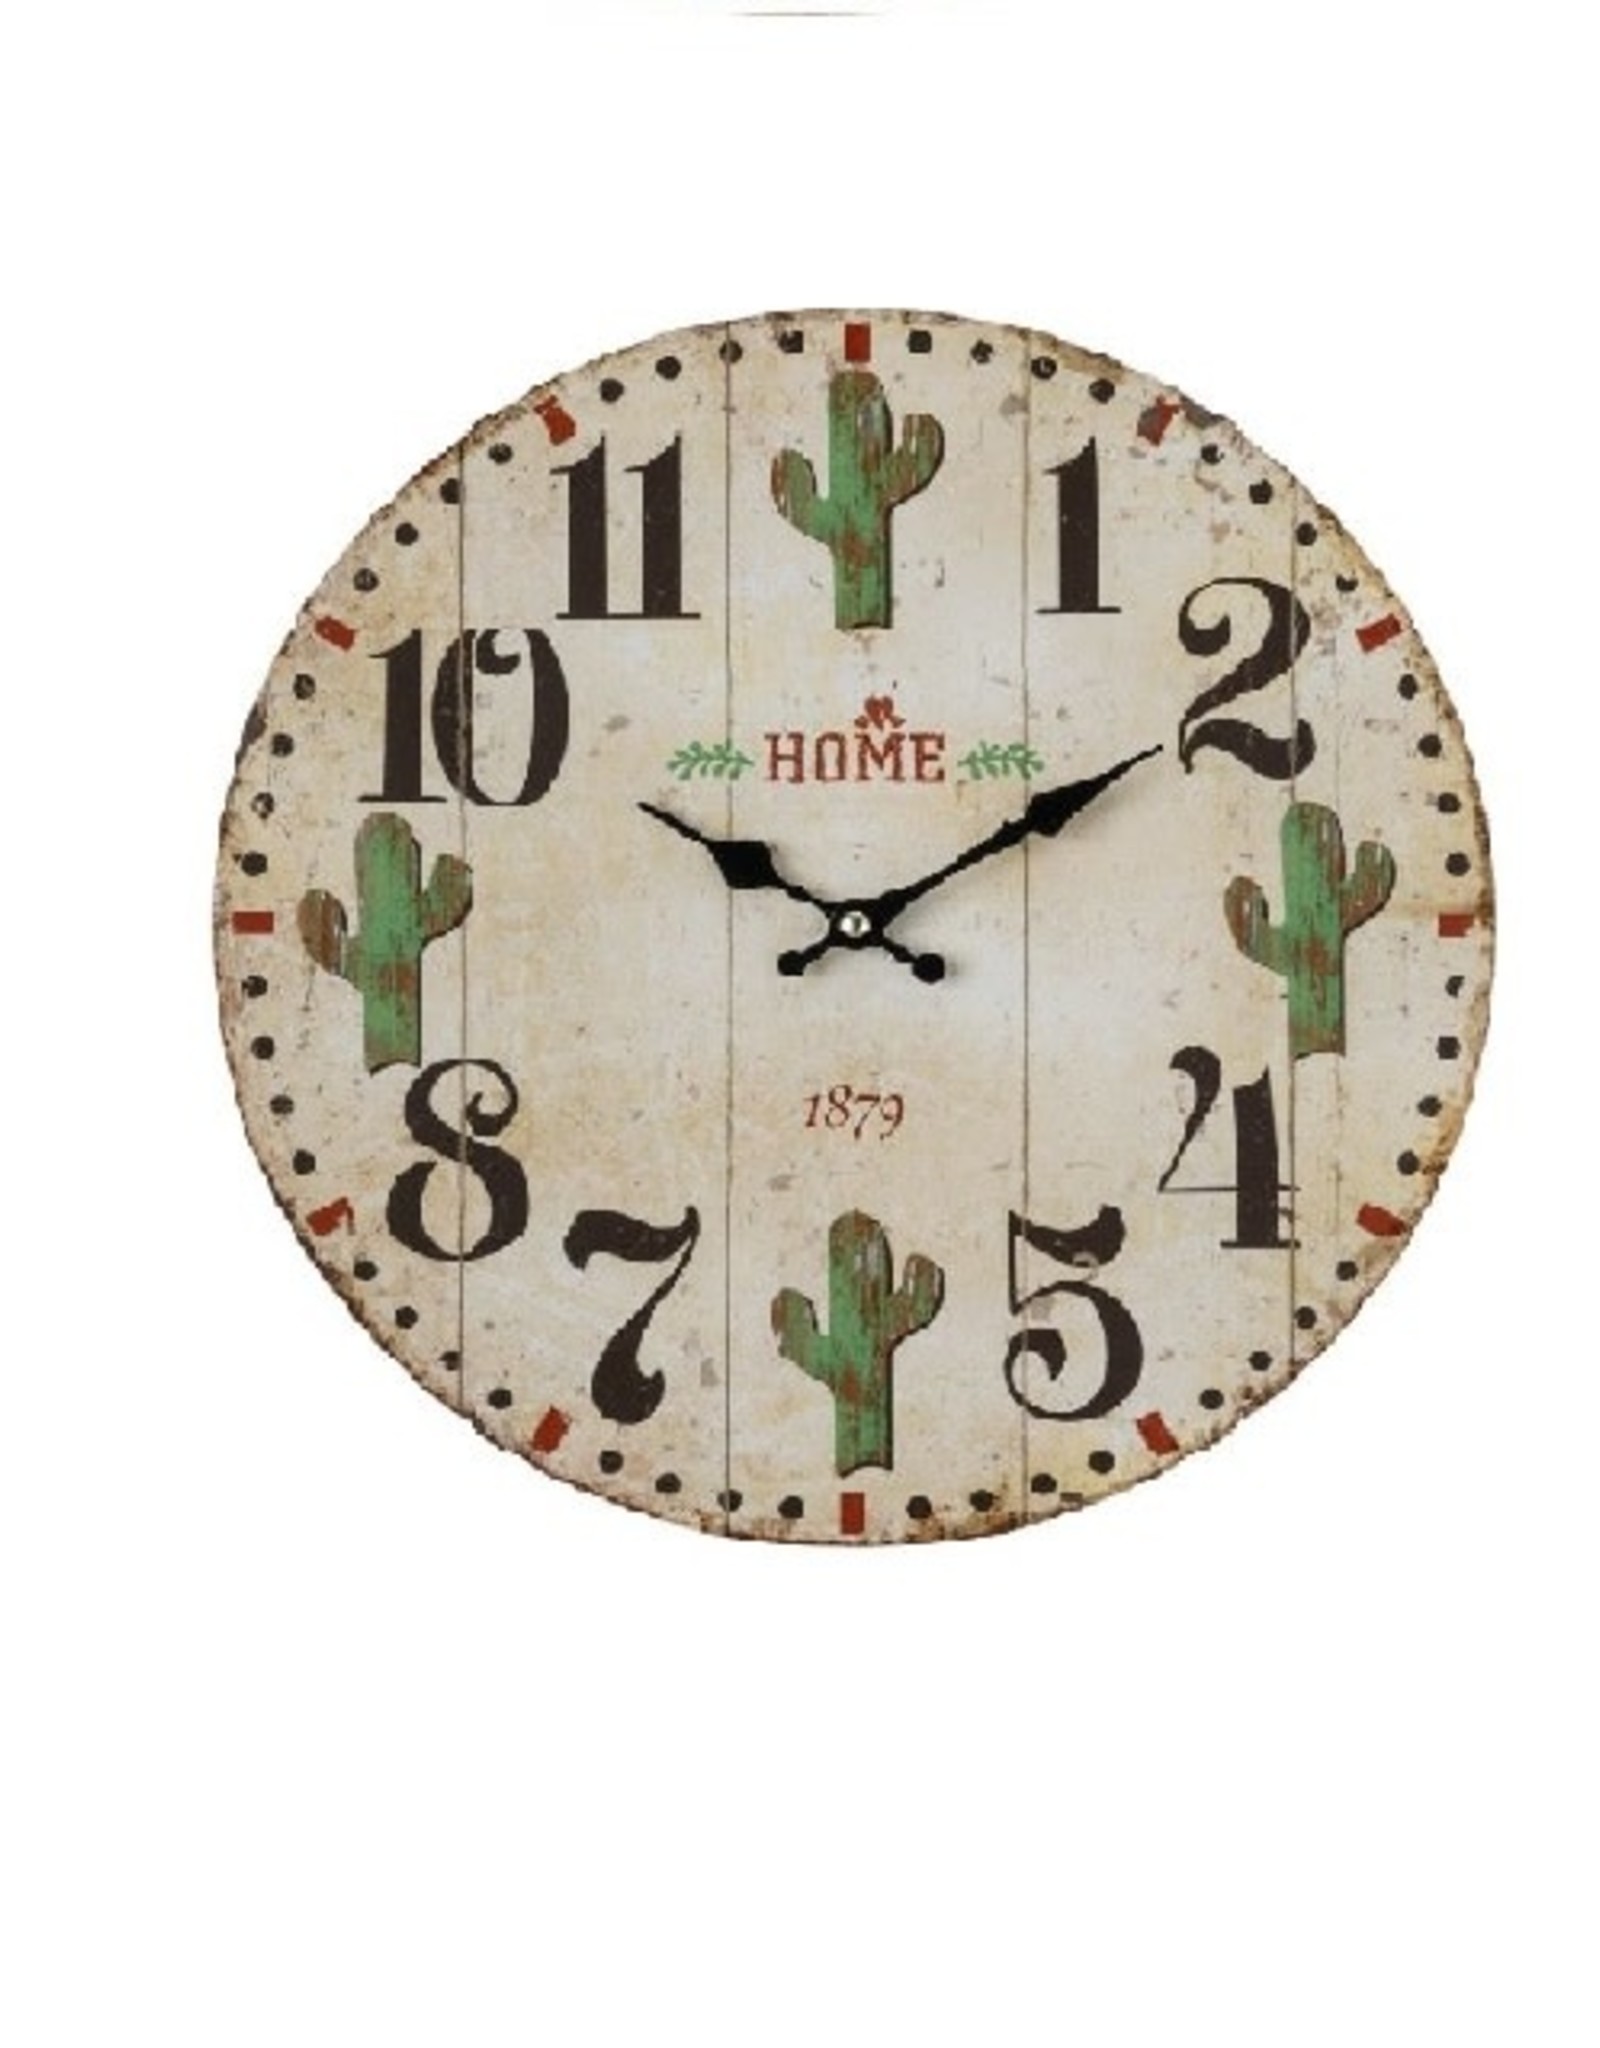 Wooden Cactus Wall Clock